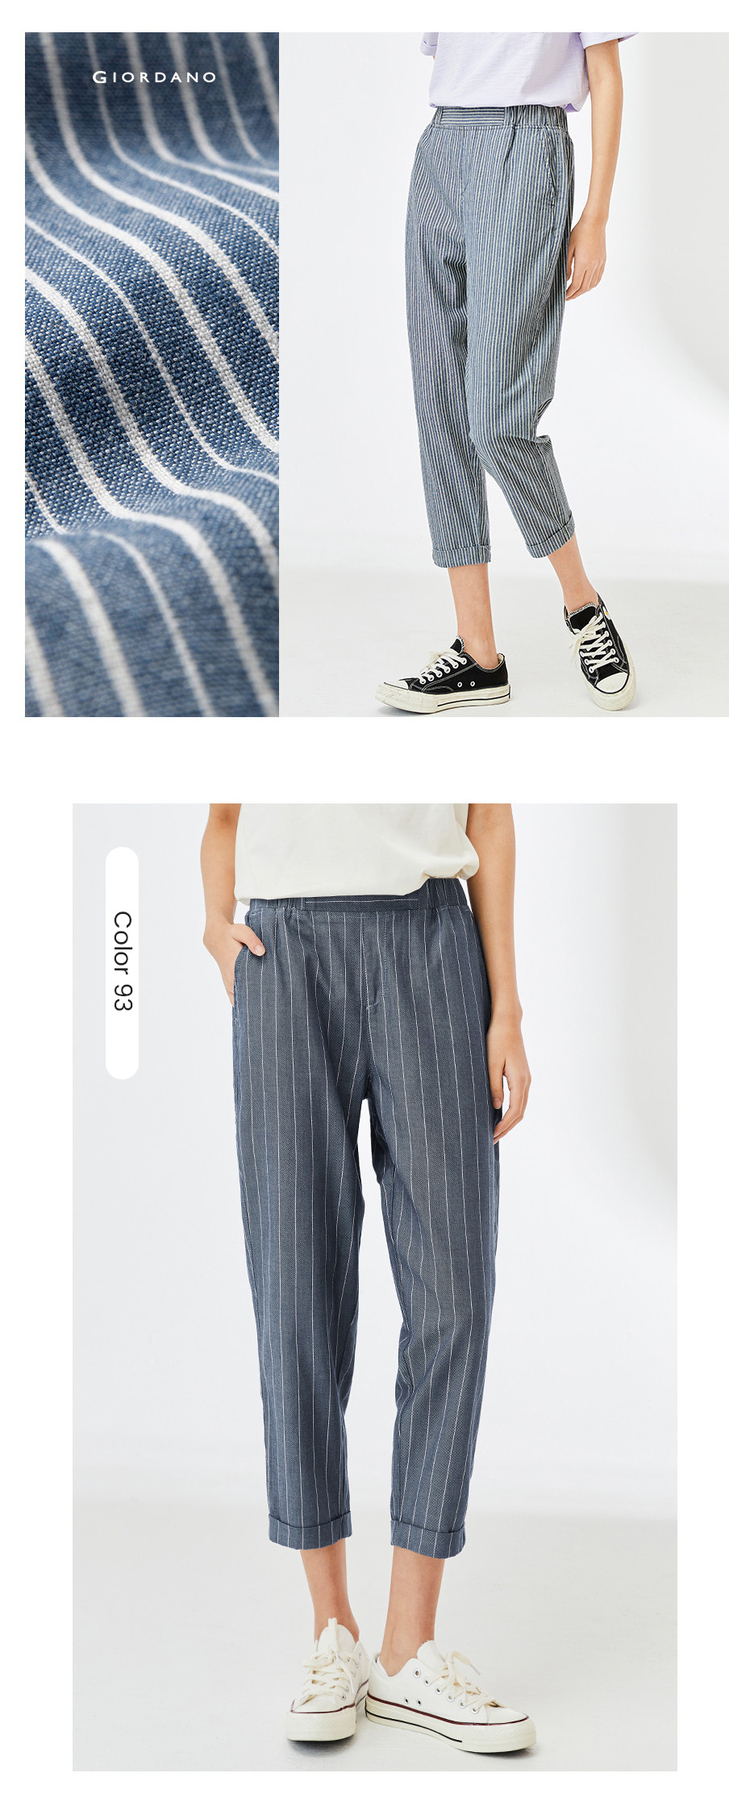 cuff GIORDANO denim | Roll-up Store Online elastic pants waist